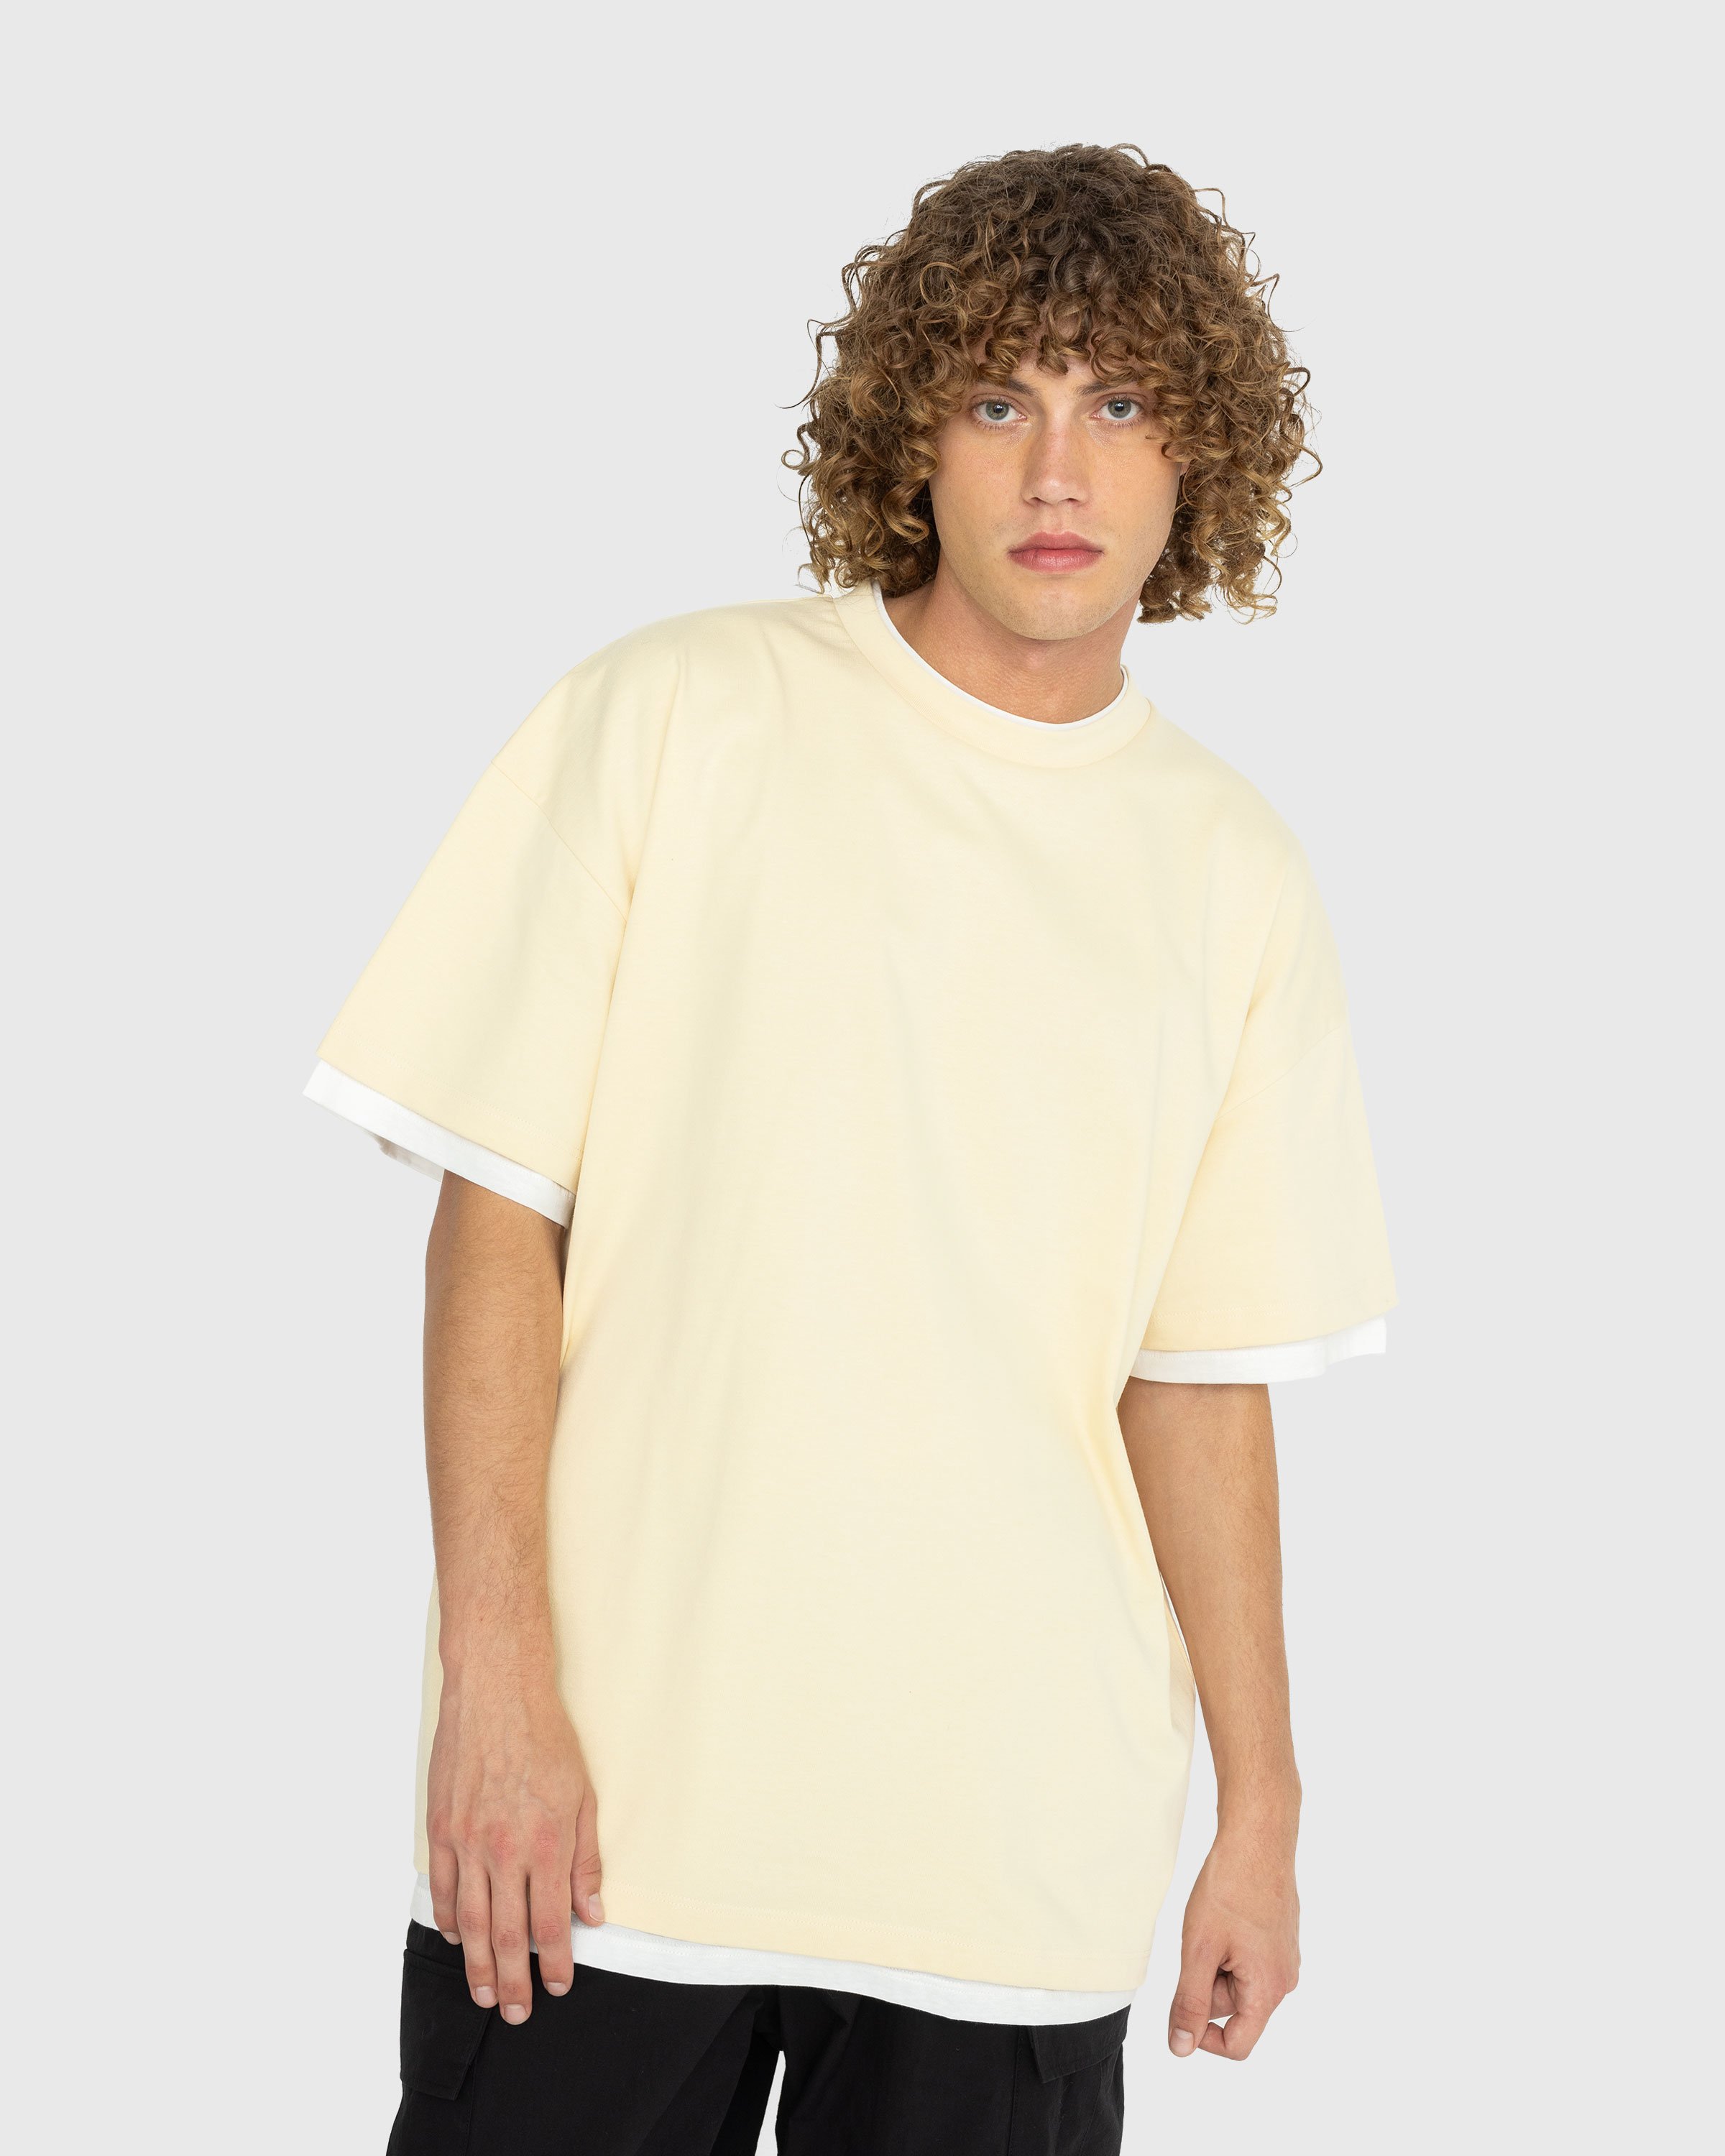 Jil Sander - Looking For Miracles T-Shirt Bone - Clothing - White - Image 2